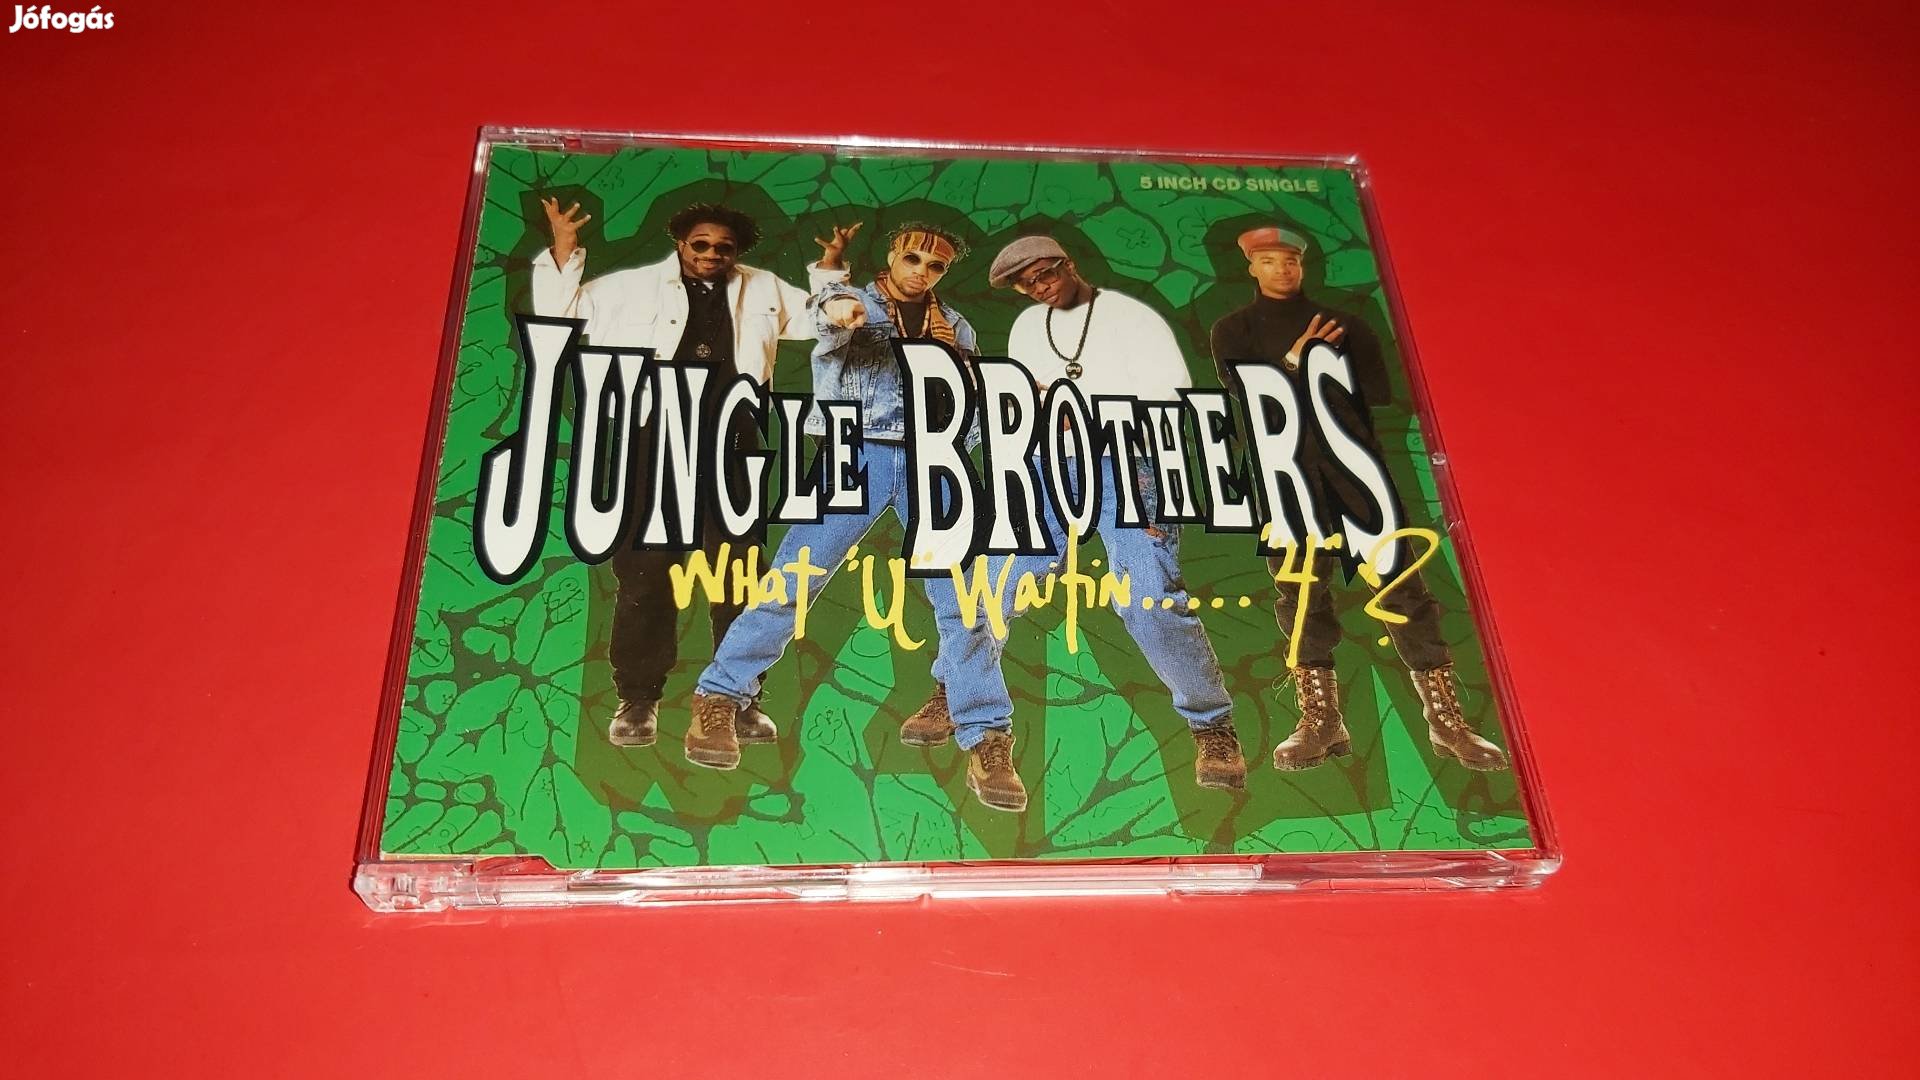 Jungle Brothers What "U" Waitin